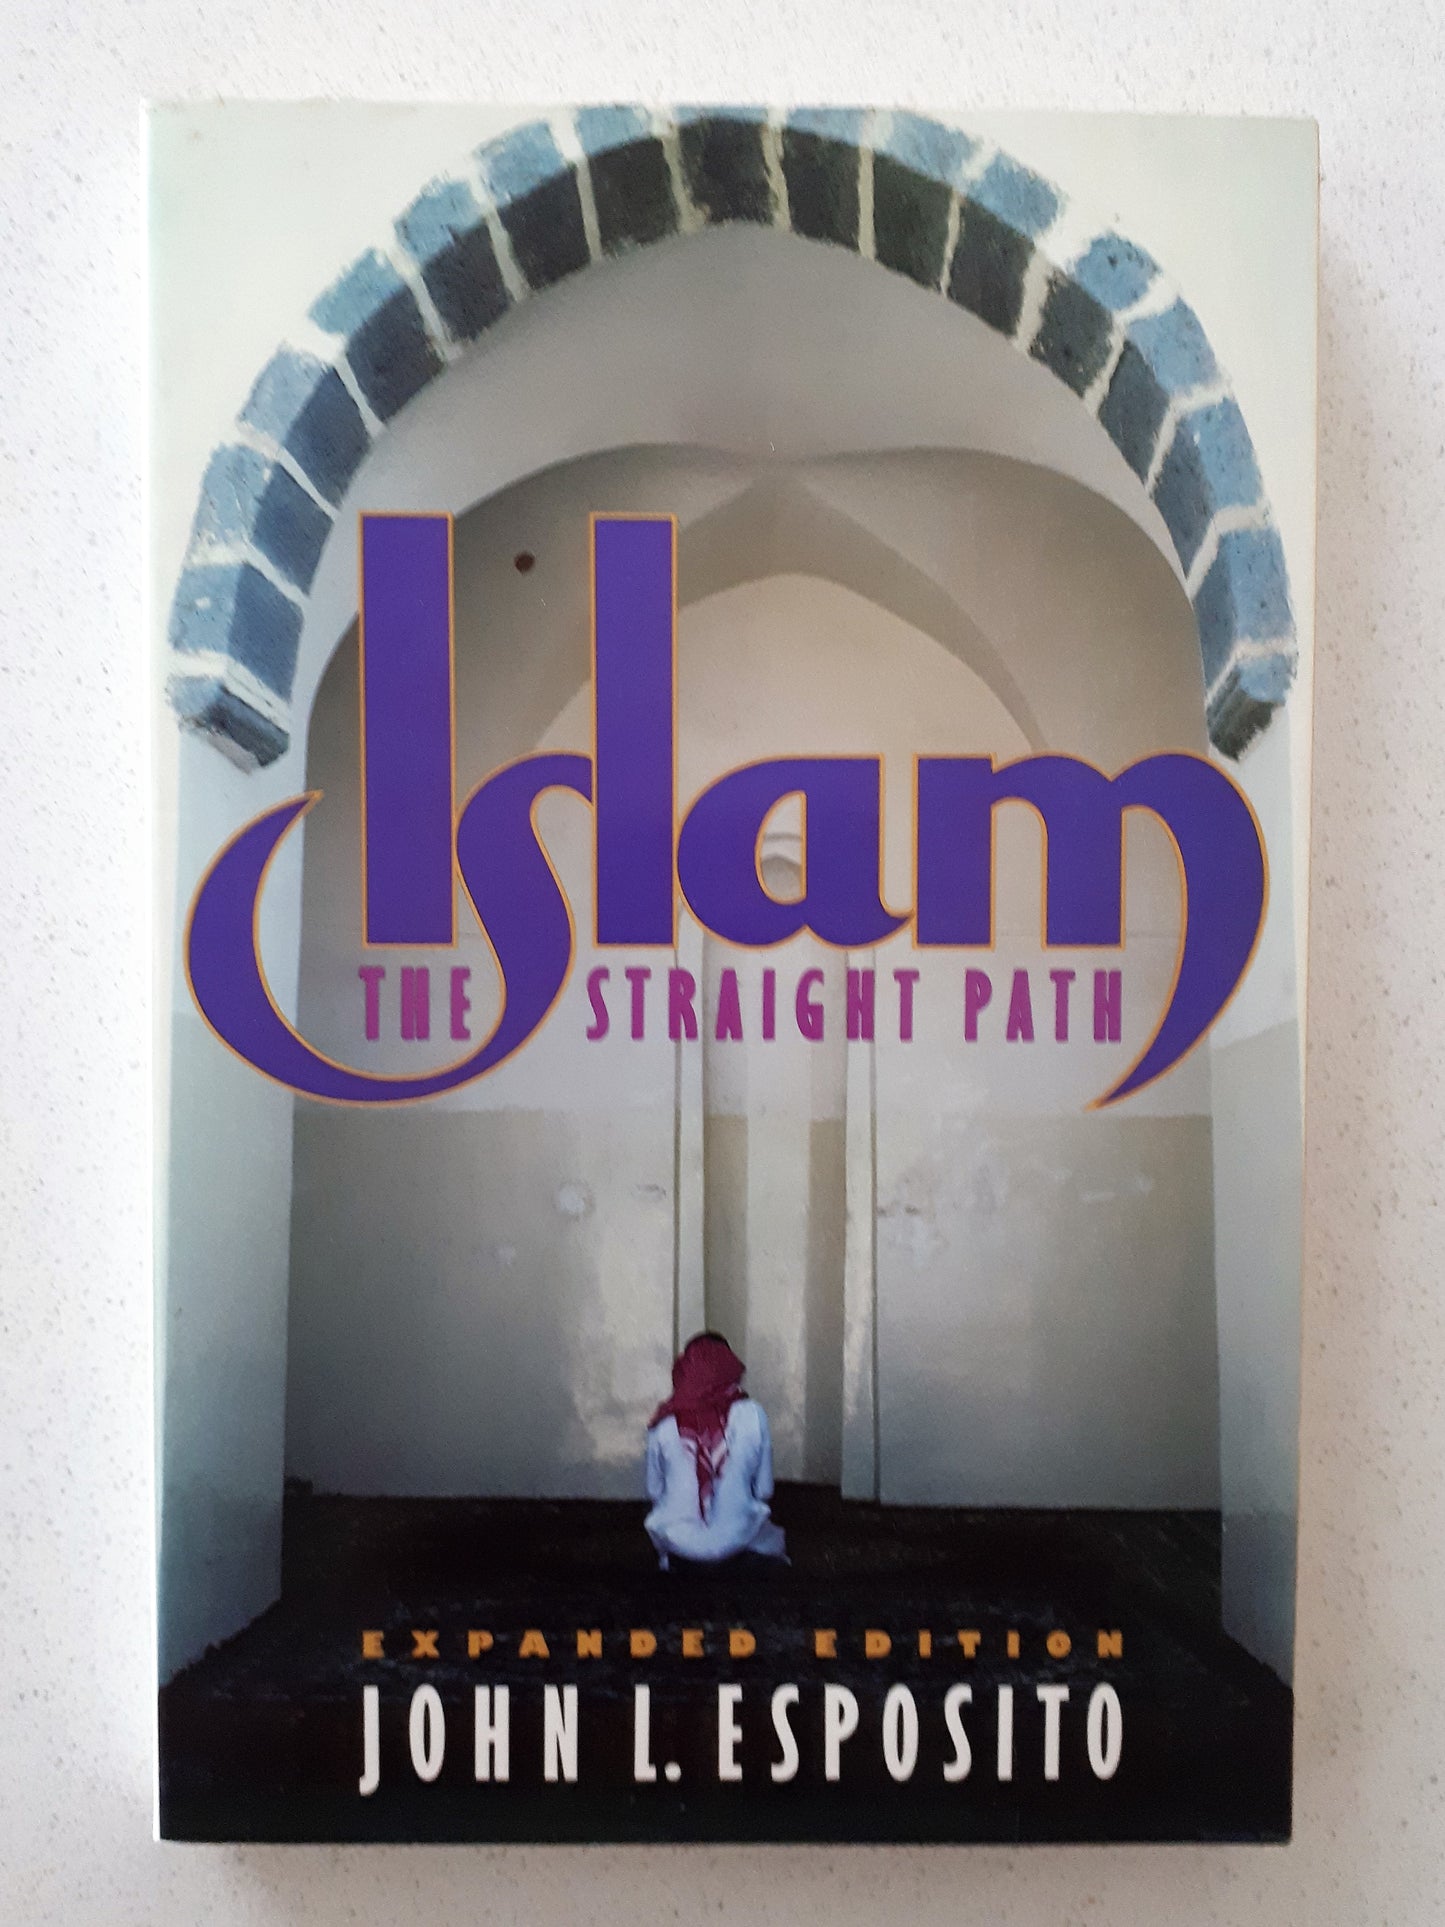 Islam The Straight Path by John L. Esposito